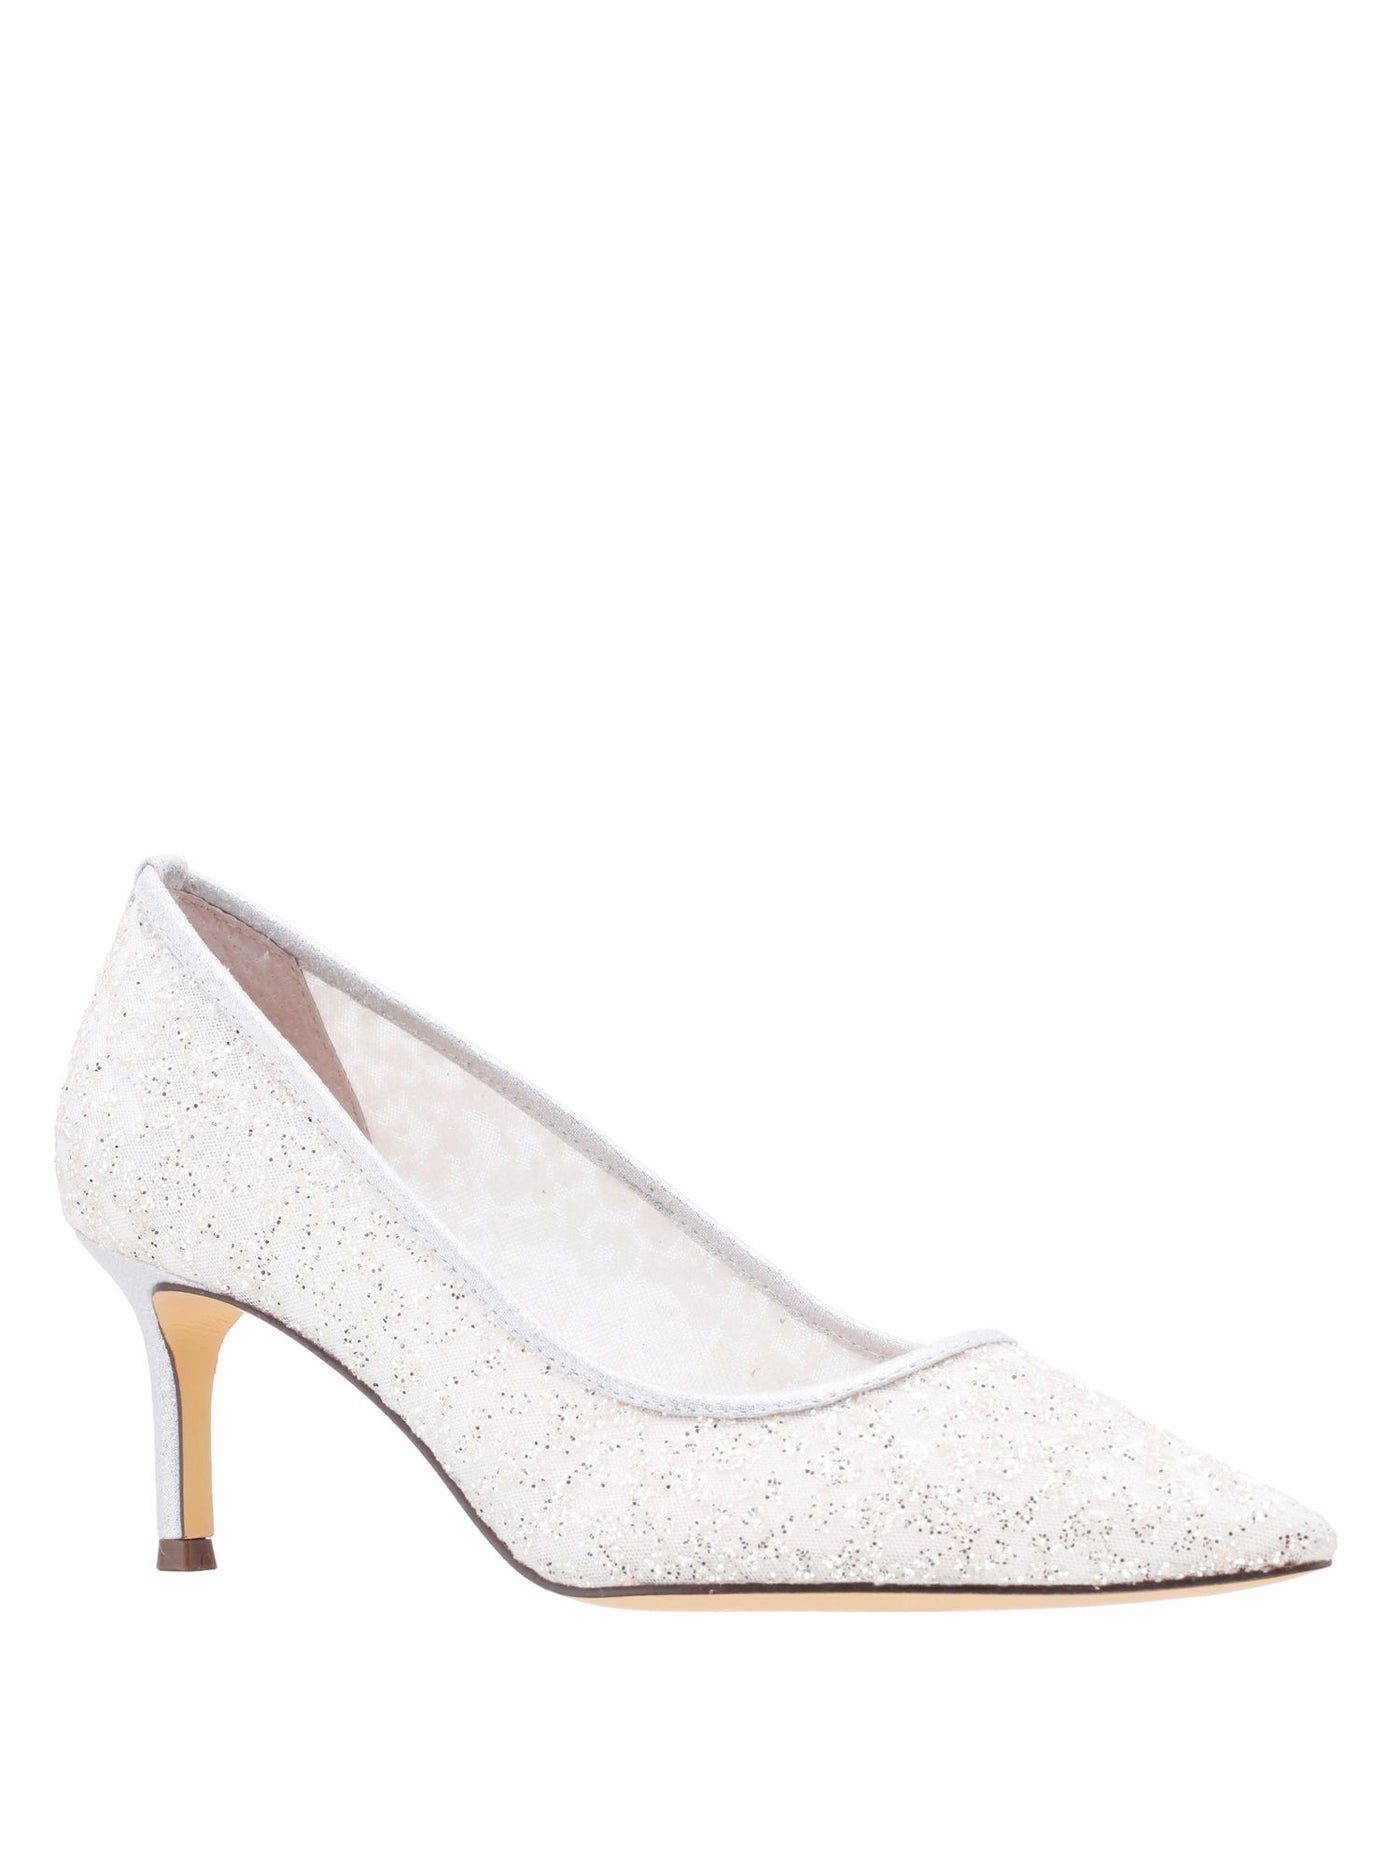 NINA NEW YORK Womens Silver Glitter Padded Nikki Pointed Toe Stiletto Slip On Dress Pumps Shoes 9 M